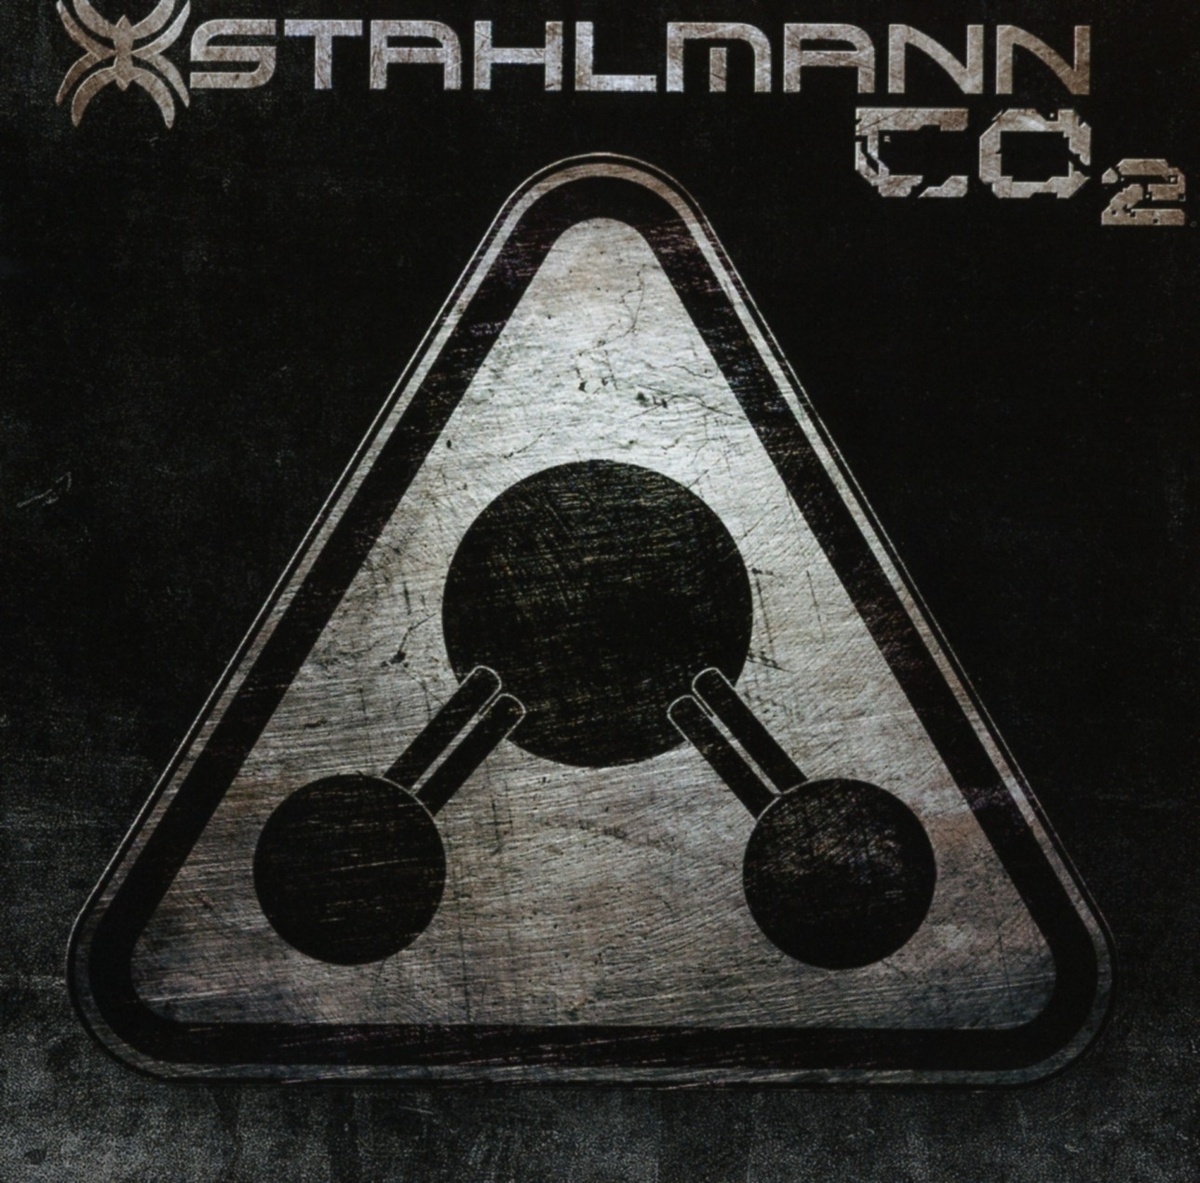 CO2 - Stahlmann. (CD)